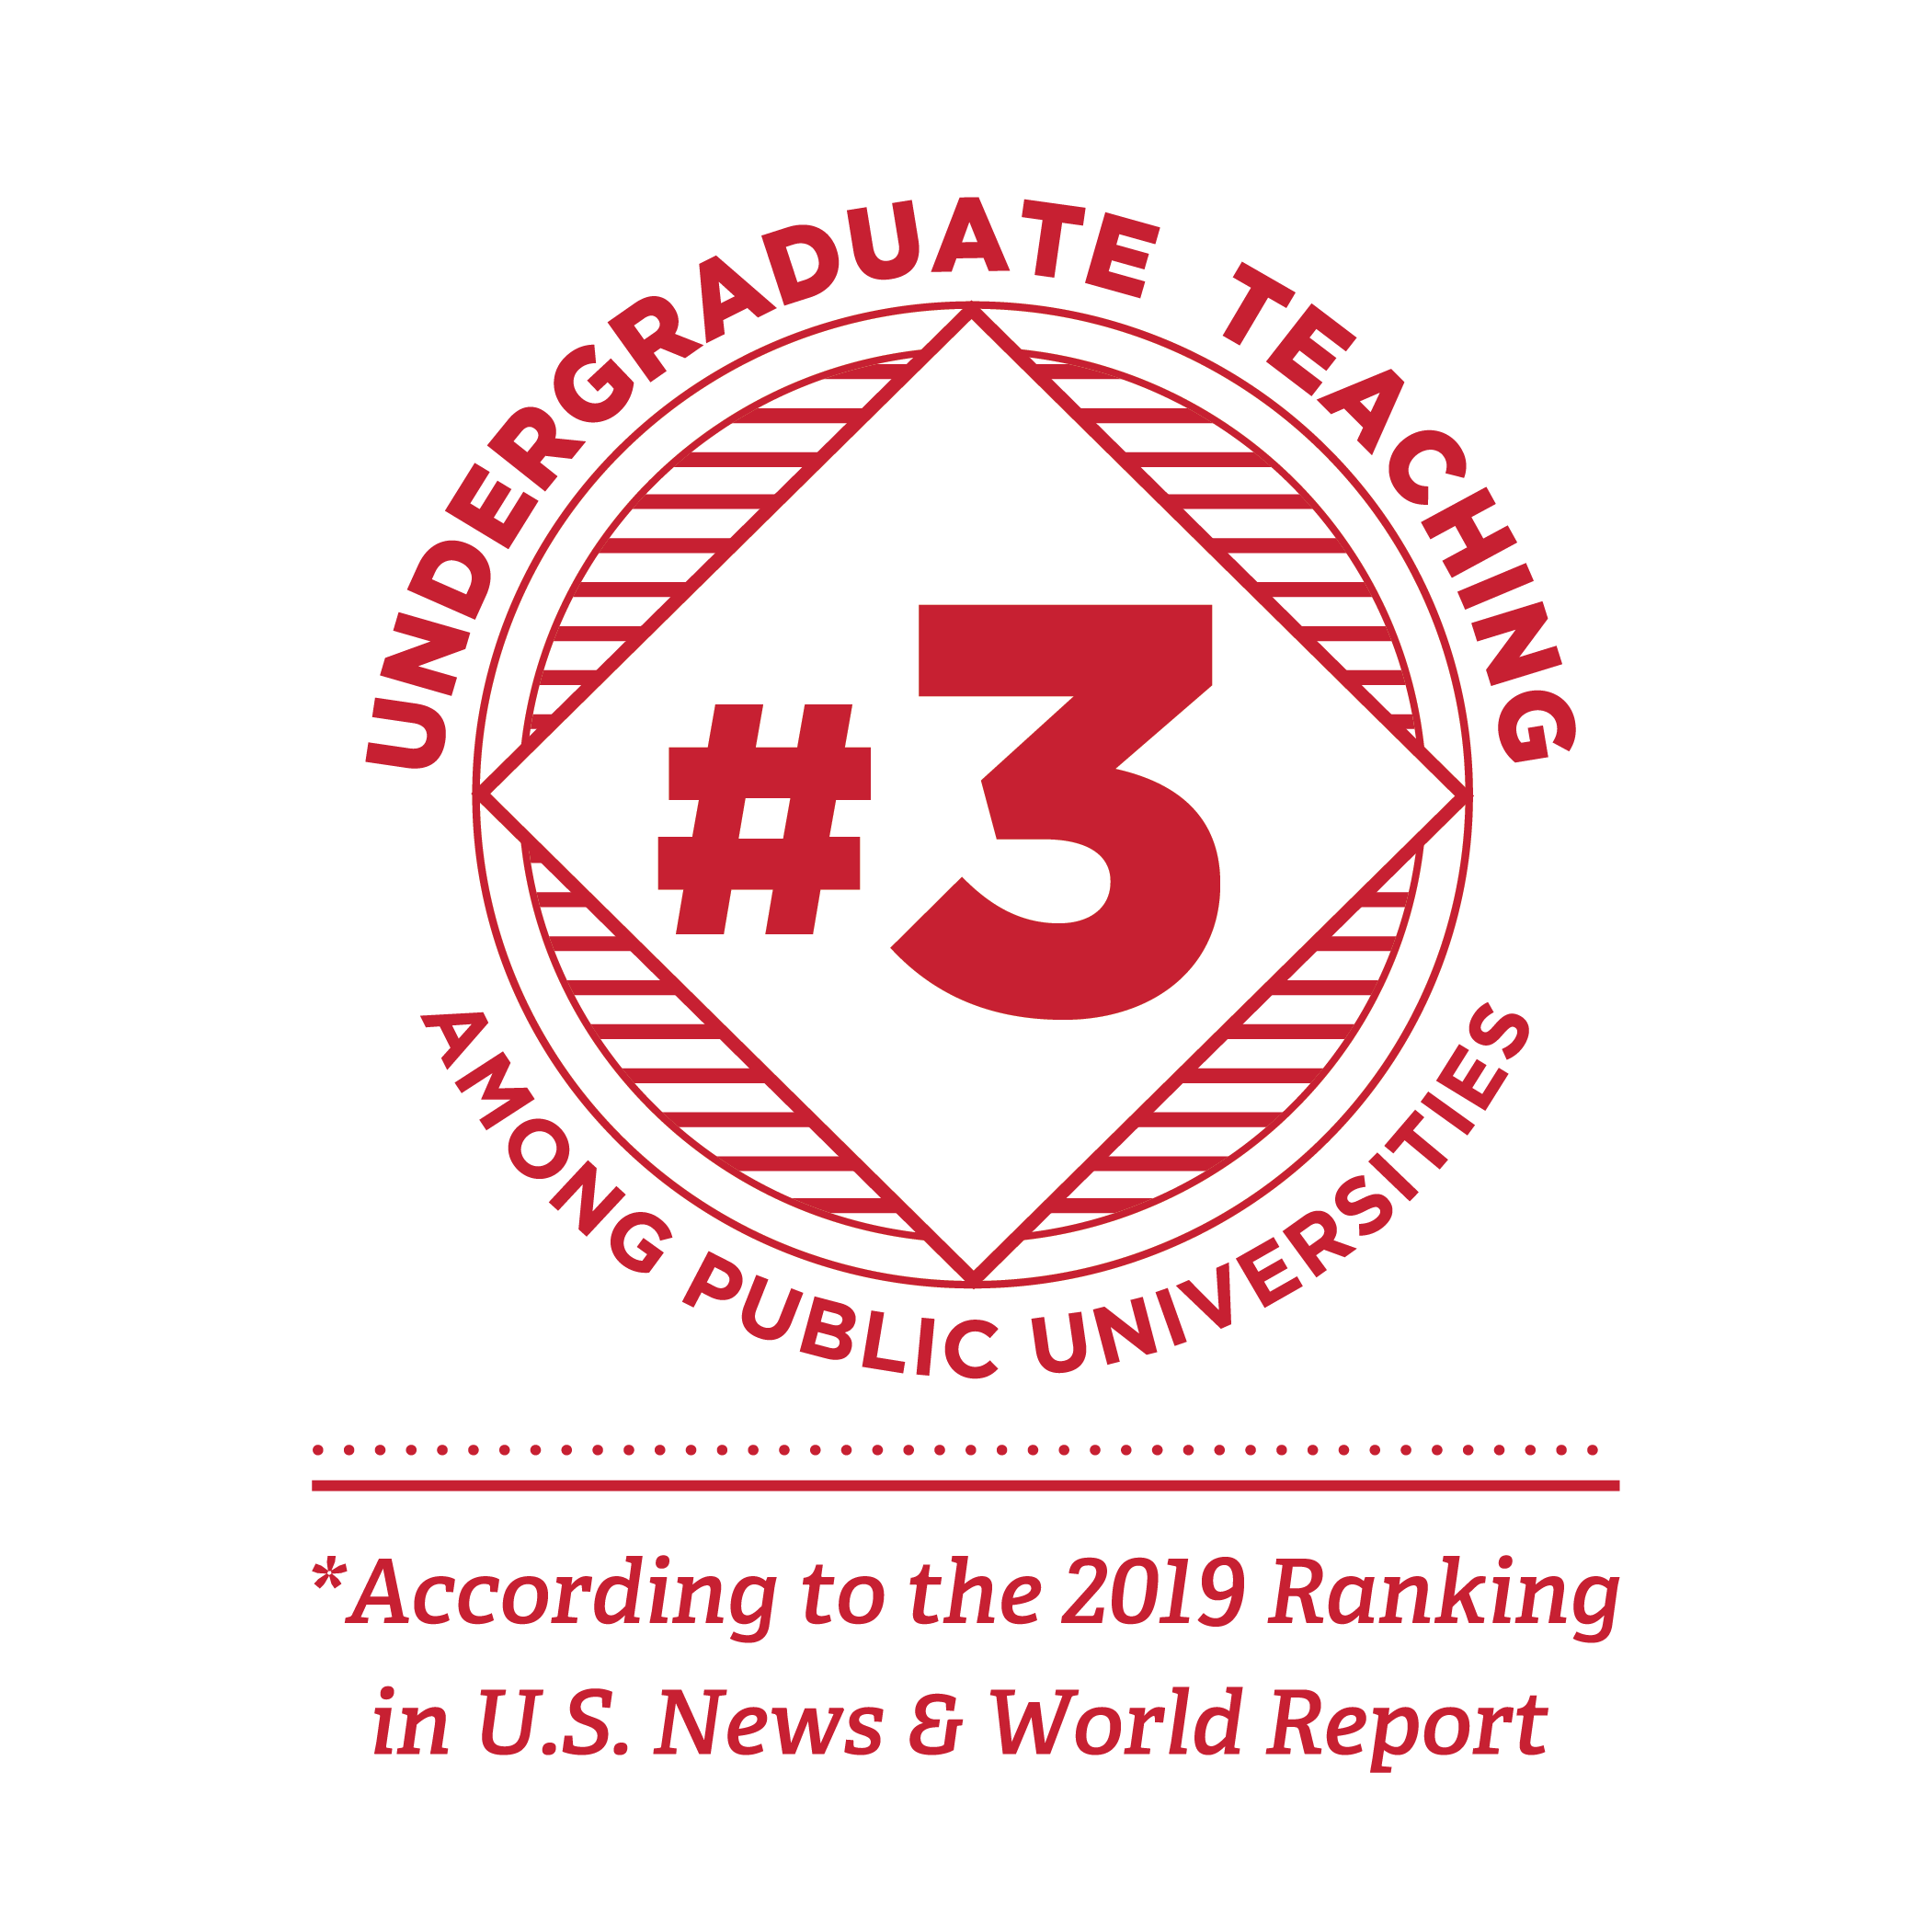 #3 in Undergraduate Teaching Among Public Universities. *According to the 2019 Ranking in U.S. News & World Report.